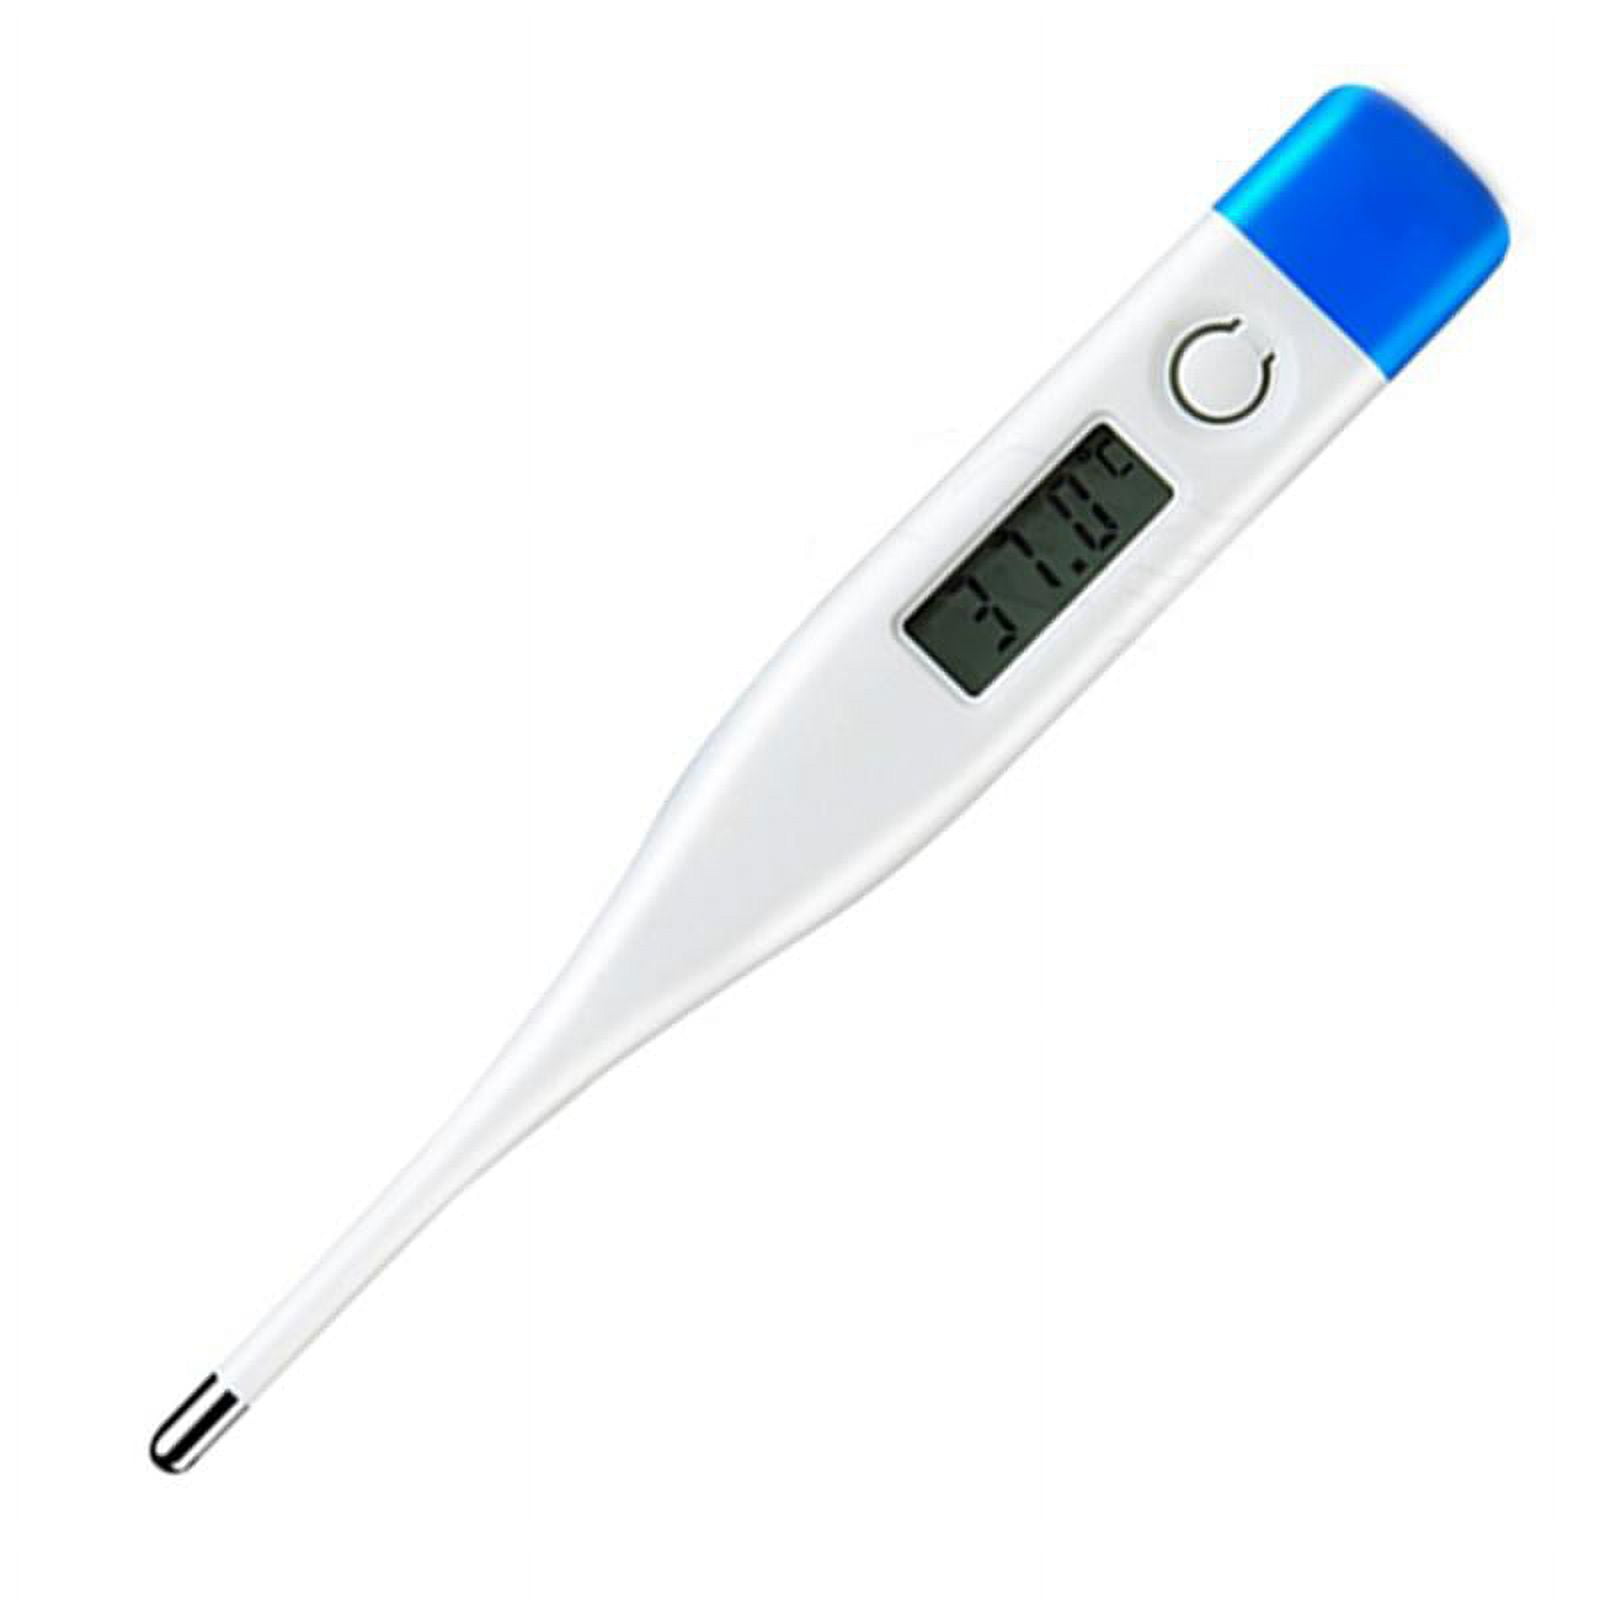 Clenera Digital Thermometer